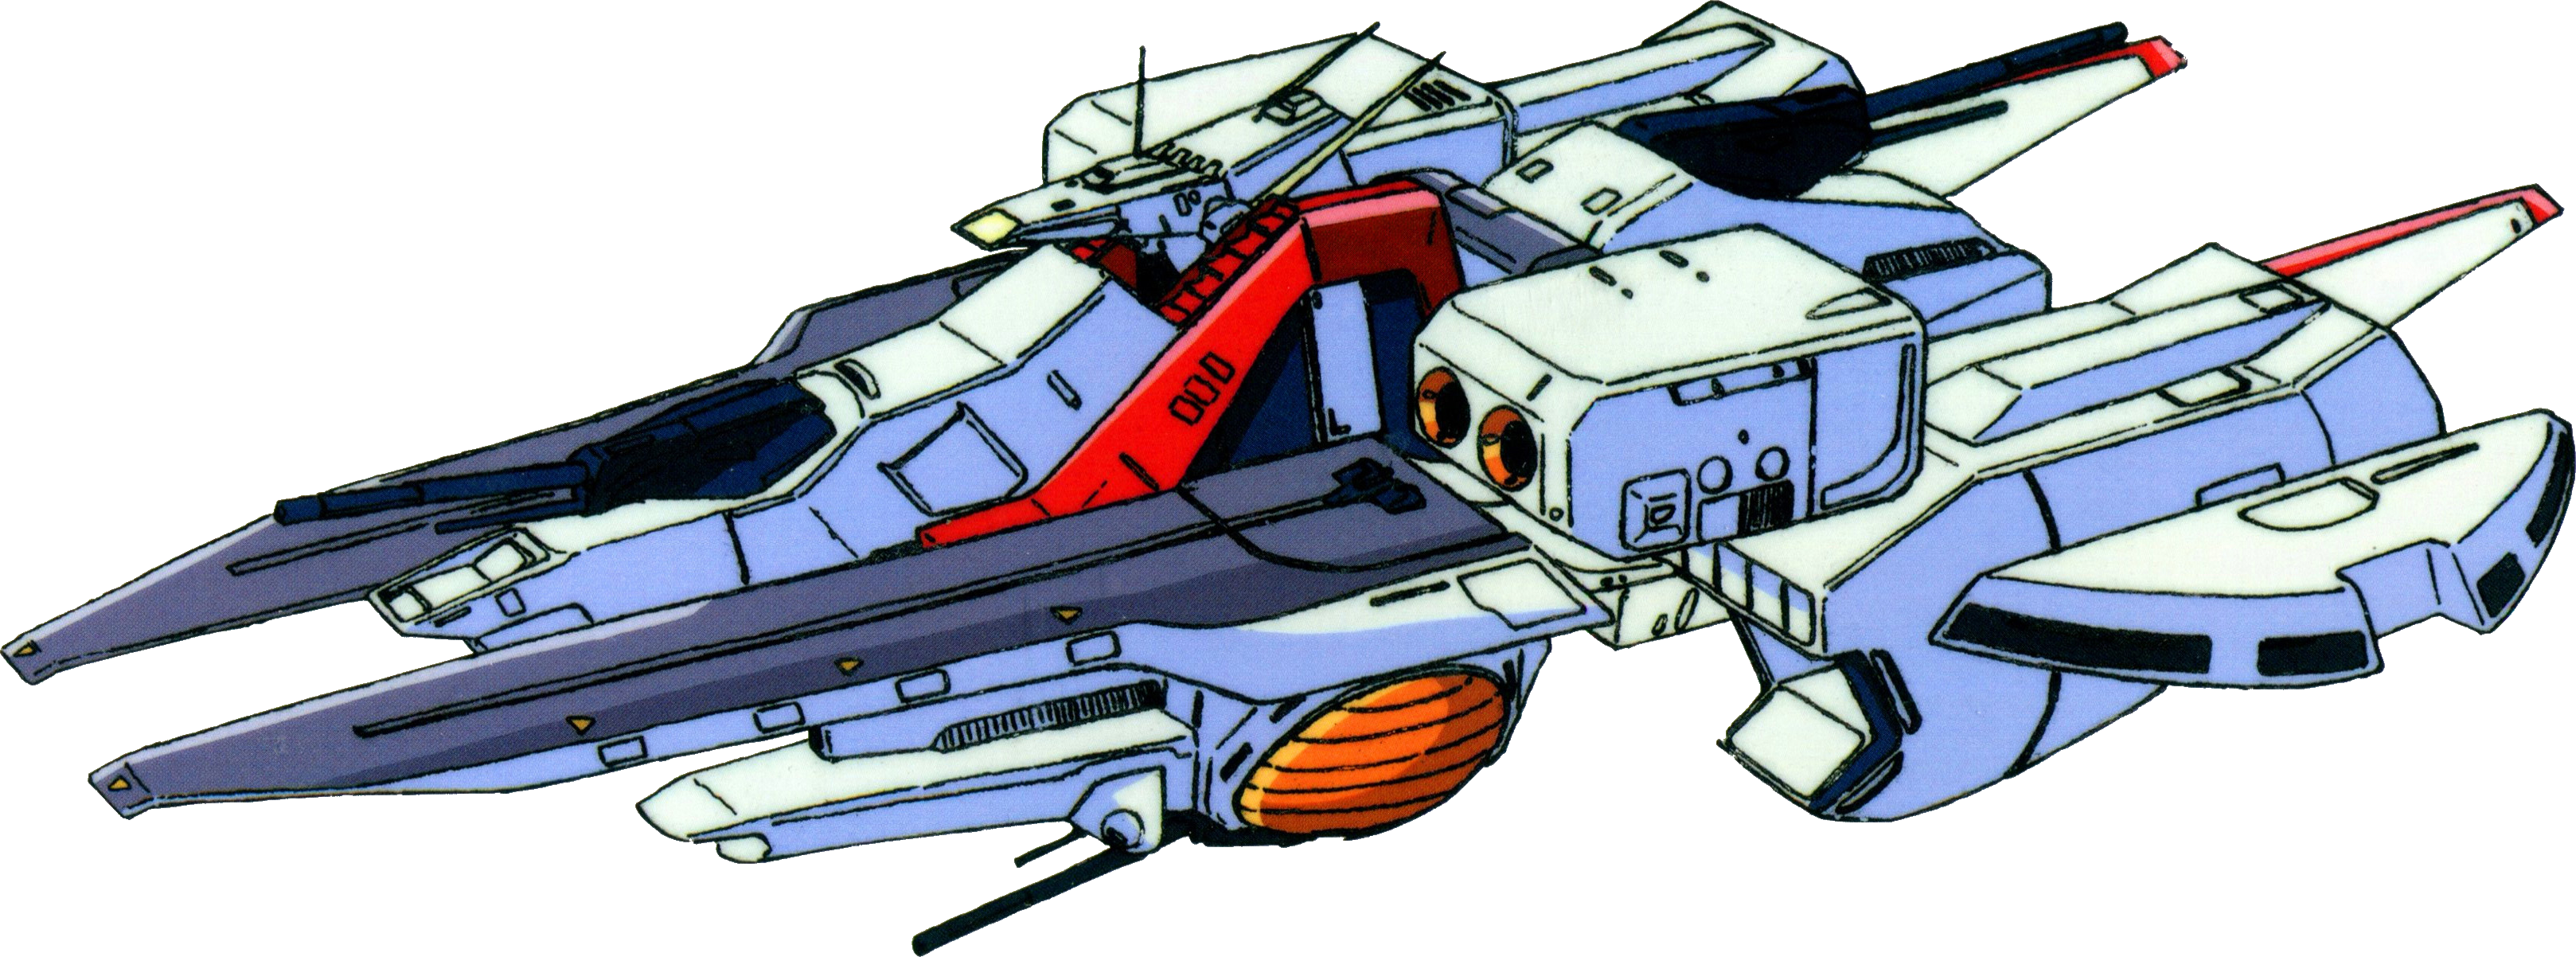 The Argama from Mobile Suit Zeta Gundam